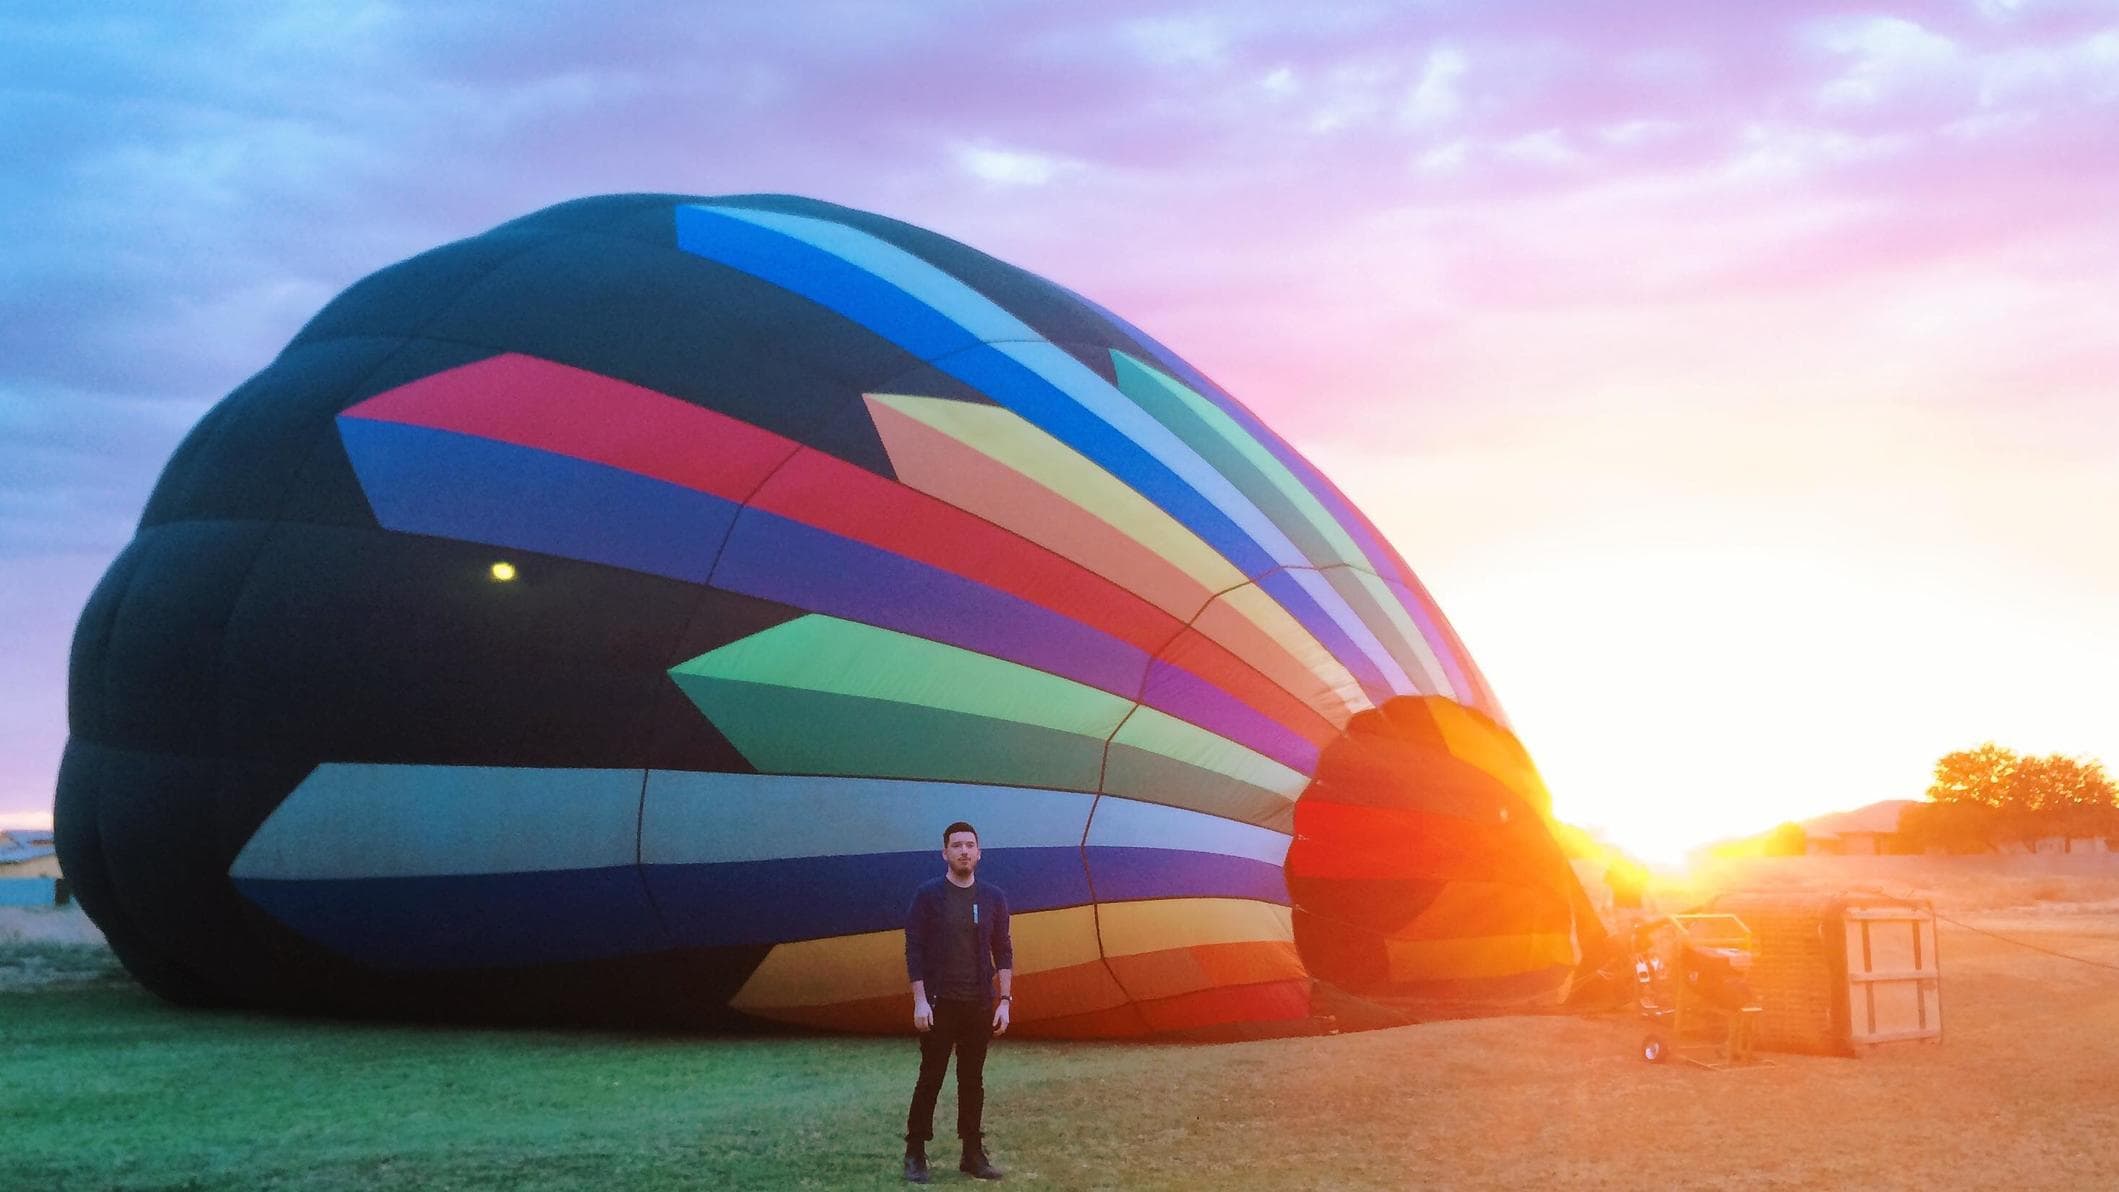 Phoenix Hot Air Balloon Rides - Aerogelic Ballooning, US, ballooning near me